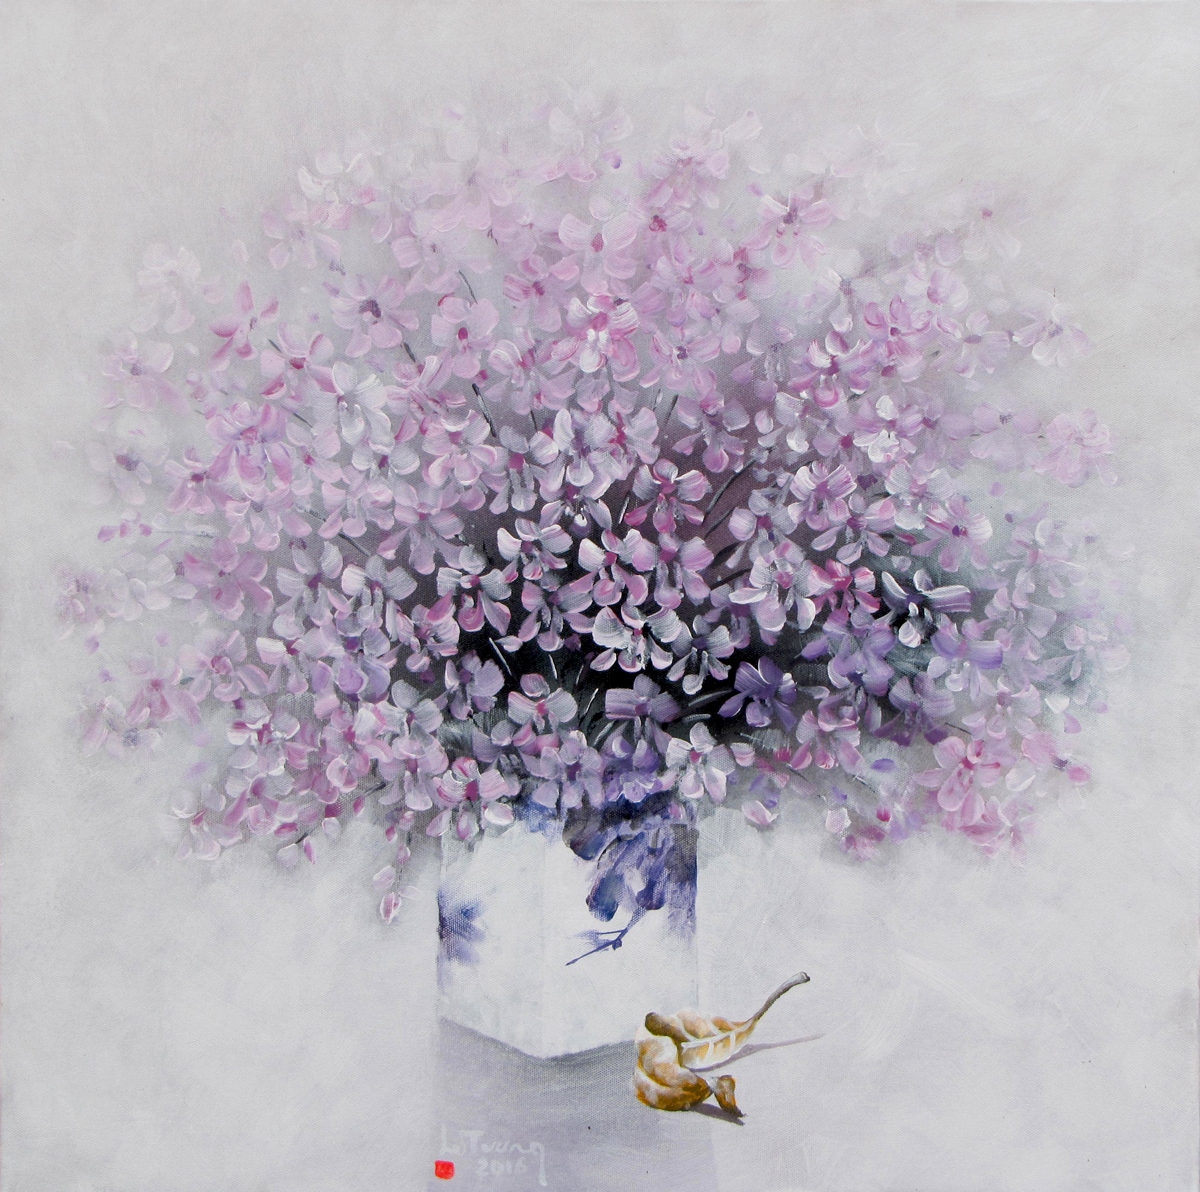 Vietnamese Art-Vase of Purple Flowers, an Oil Painting on Canvas